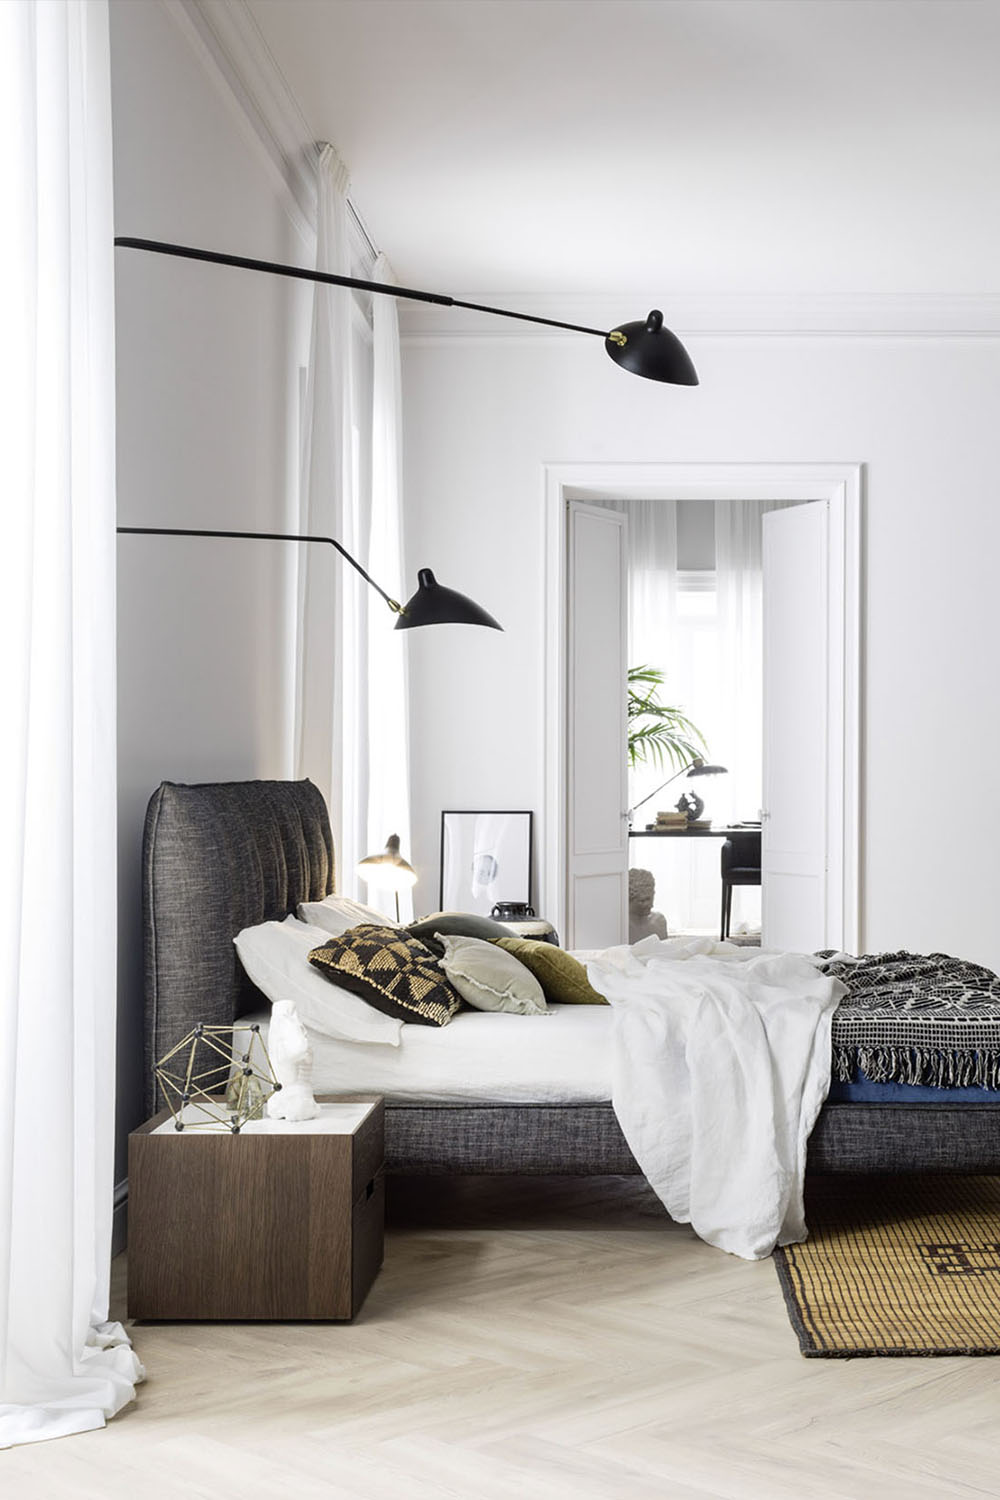 Tufte luxury, modern, contemporary Italian bed by Novamobili. Sold by Krieder UK.